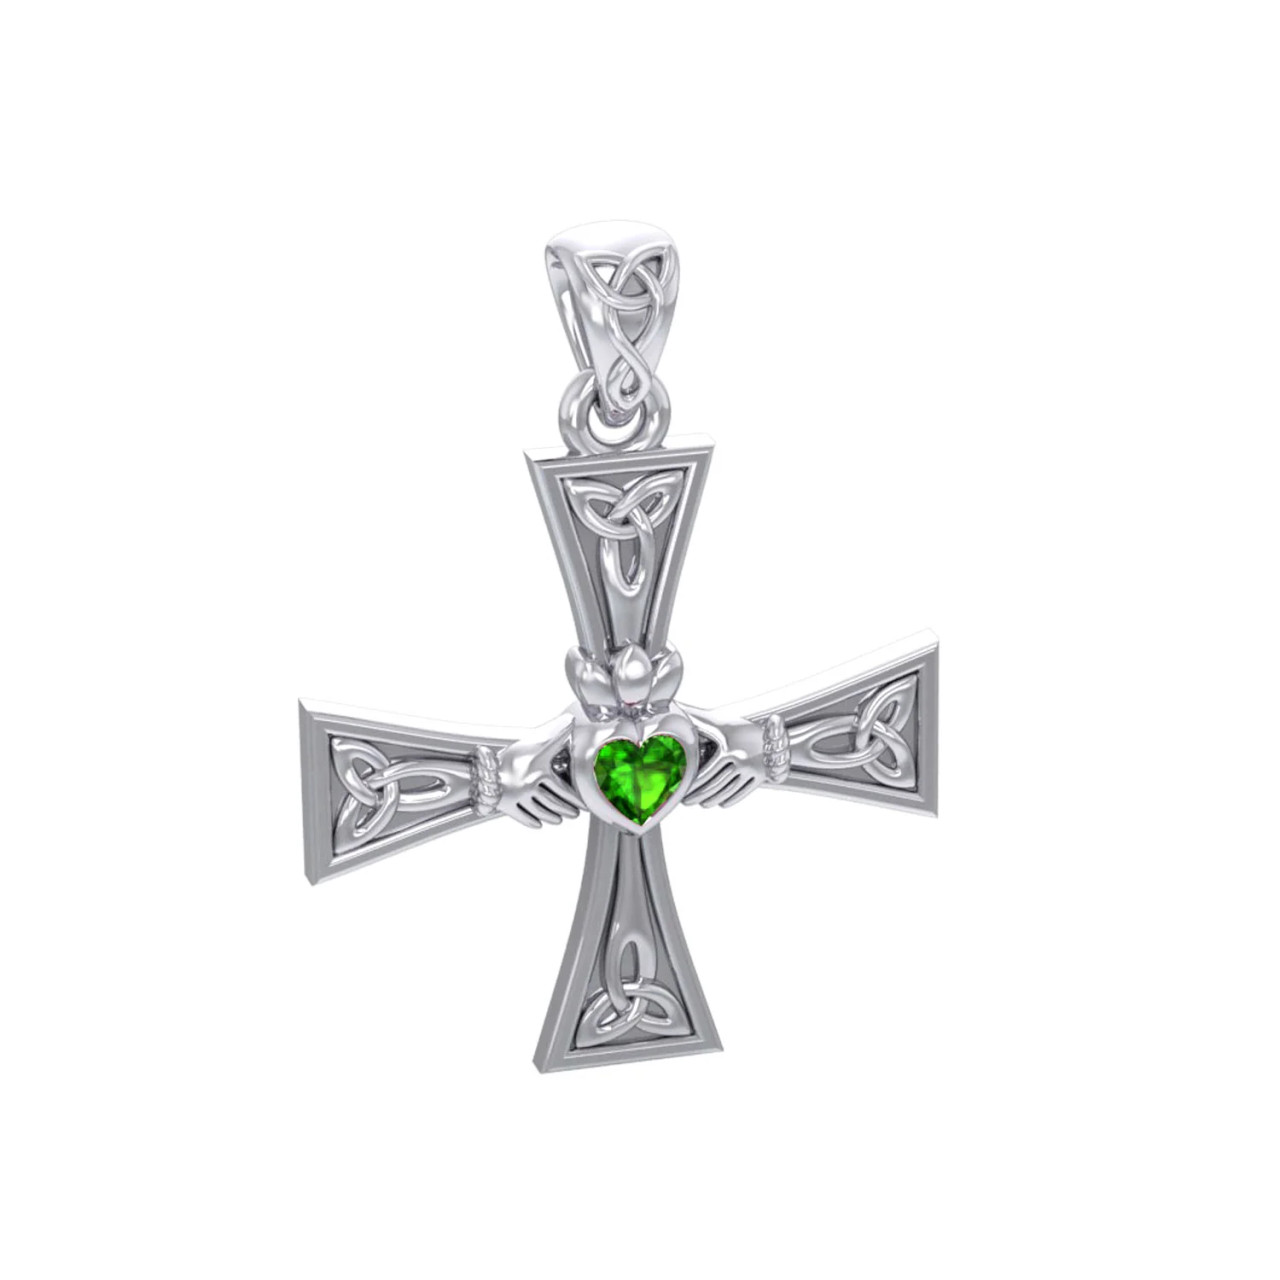 Large Unisex 925 Sterling Silver Irish Celtic Claddagh Cross Pendant + Chain  | eBay